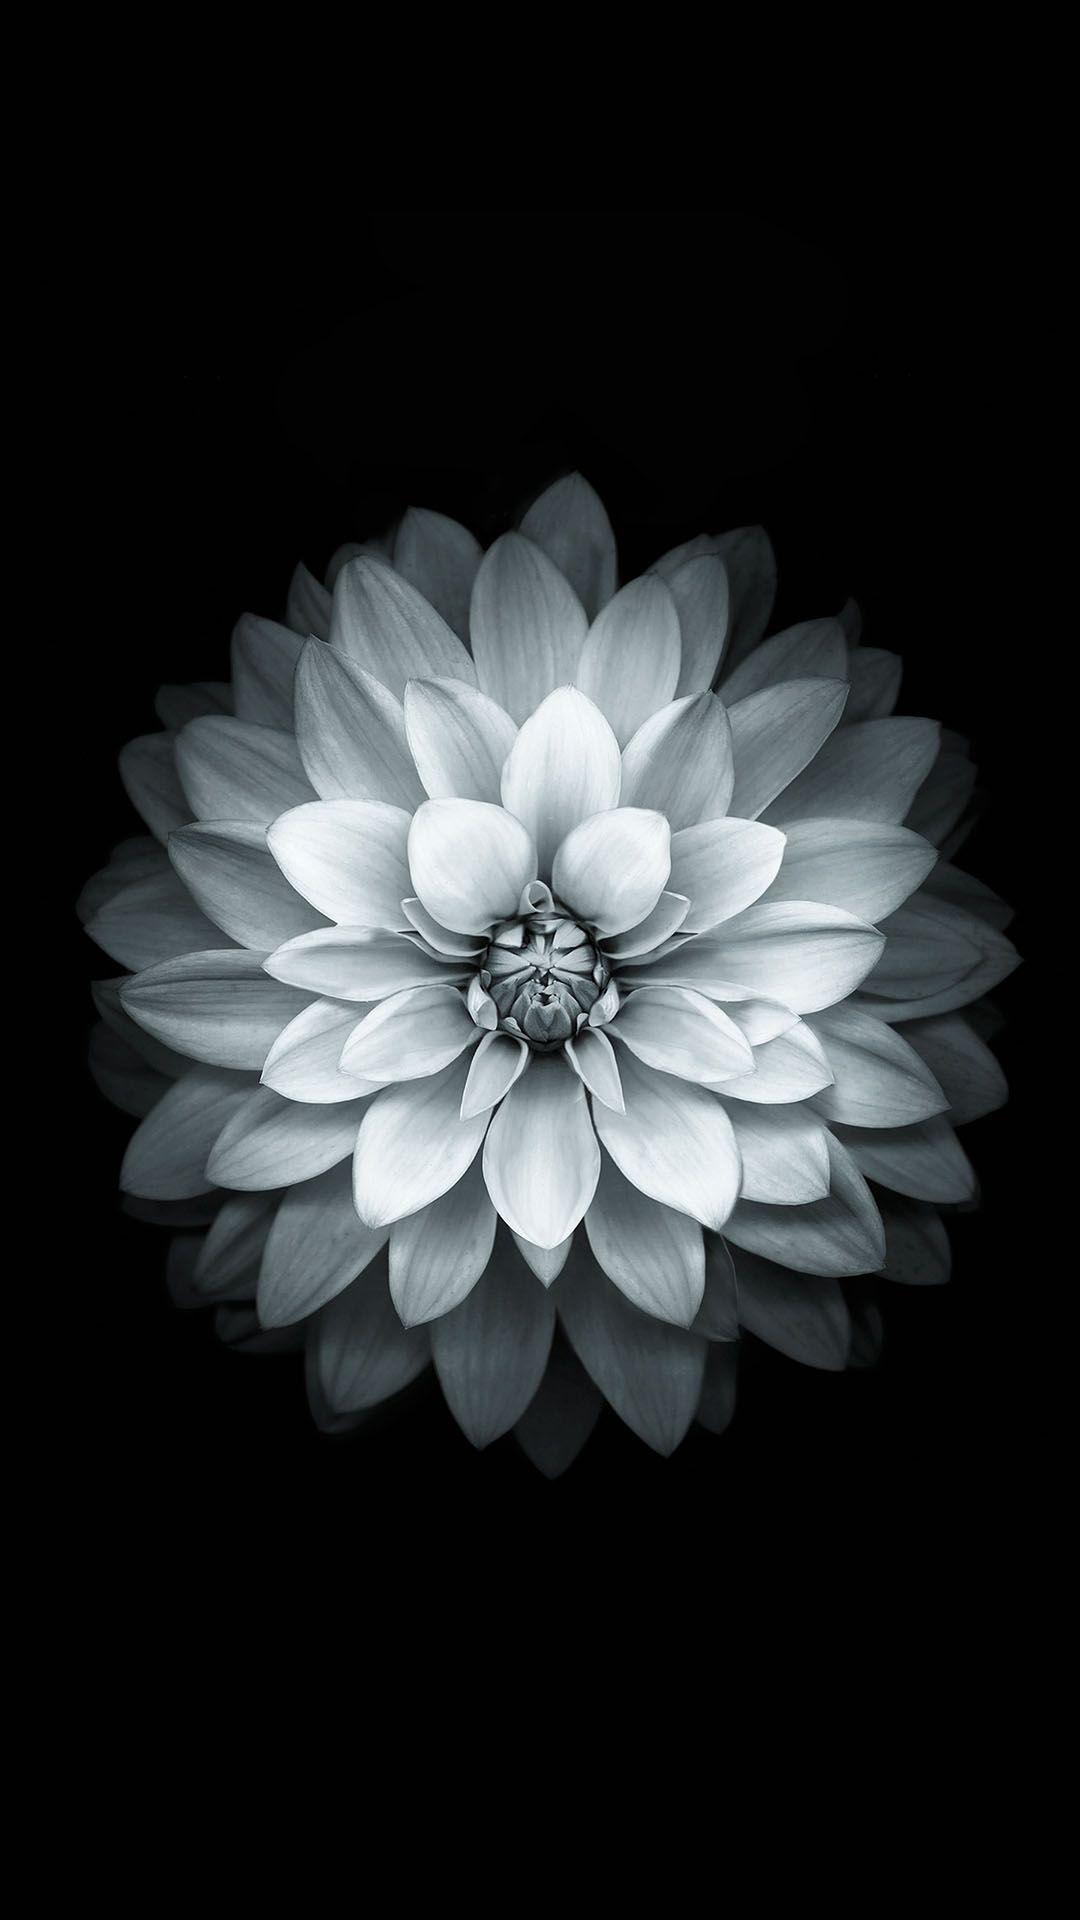 Black White Apple Lotus Flower Android Wallpaper free download